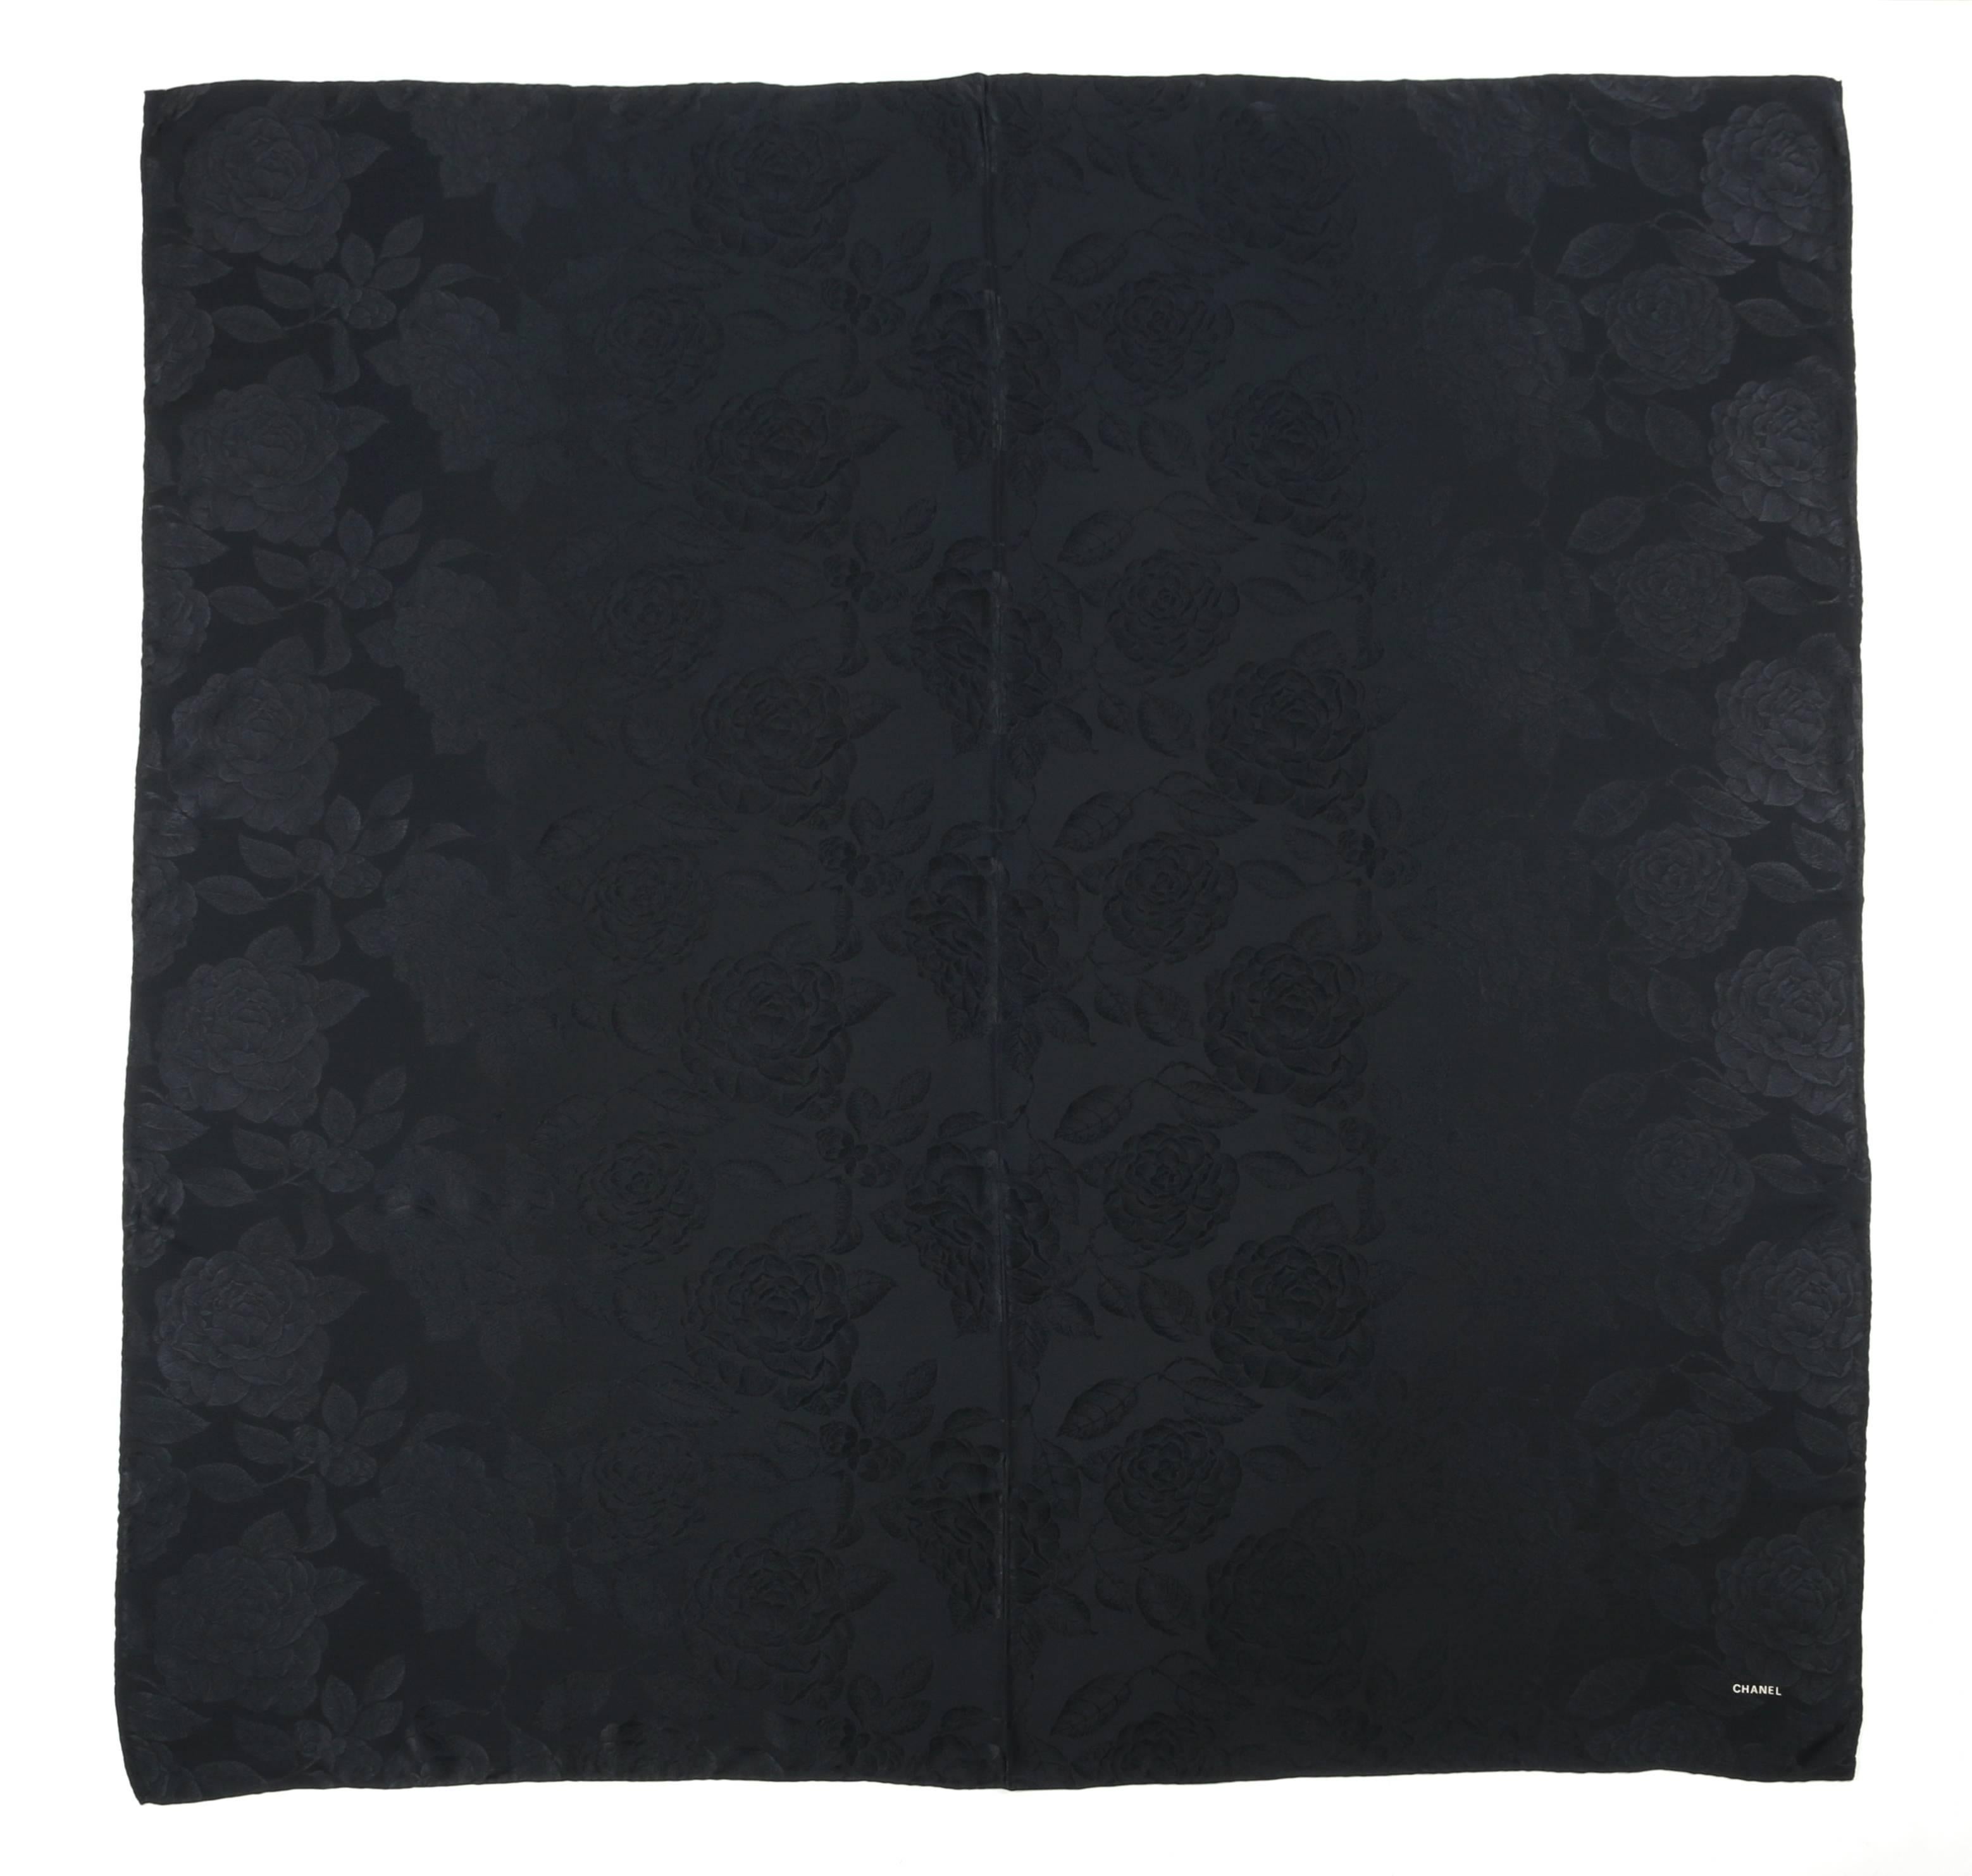 Women's CHANEL Black Satin Camellia Print 100% Silk Large Scarf Wrap Shawl With Box 